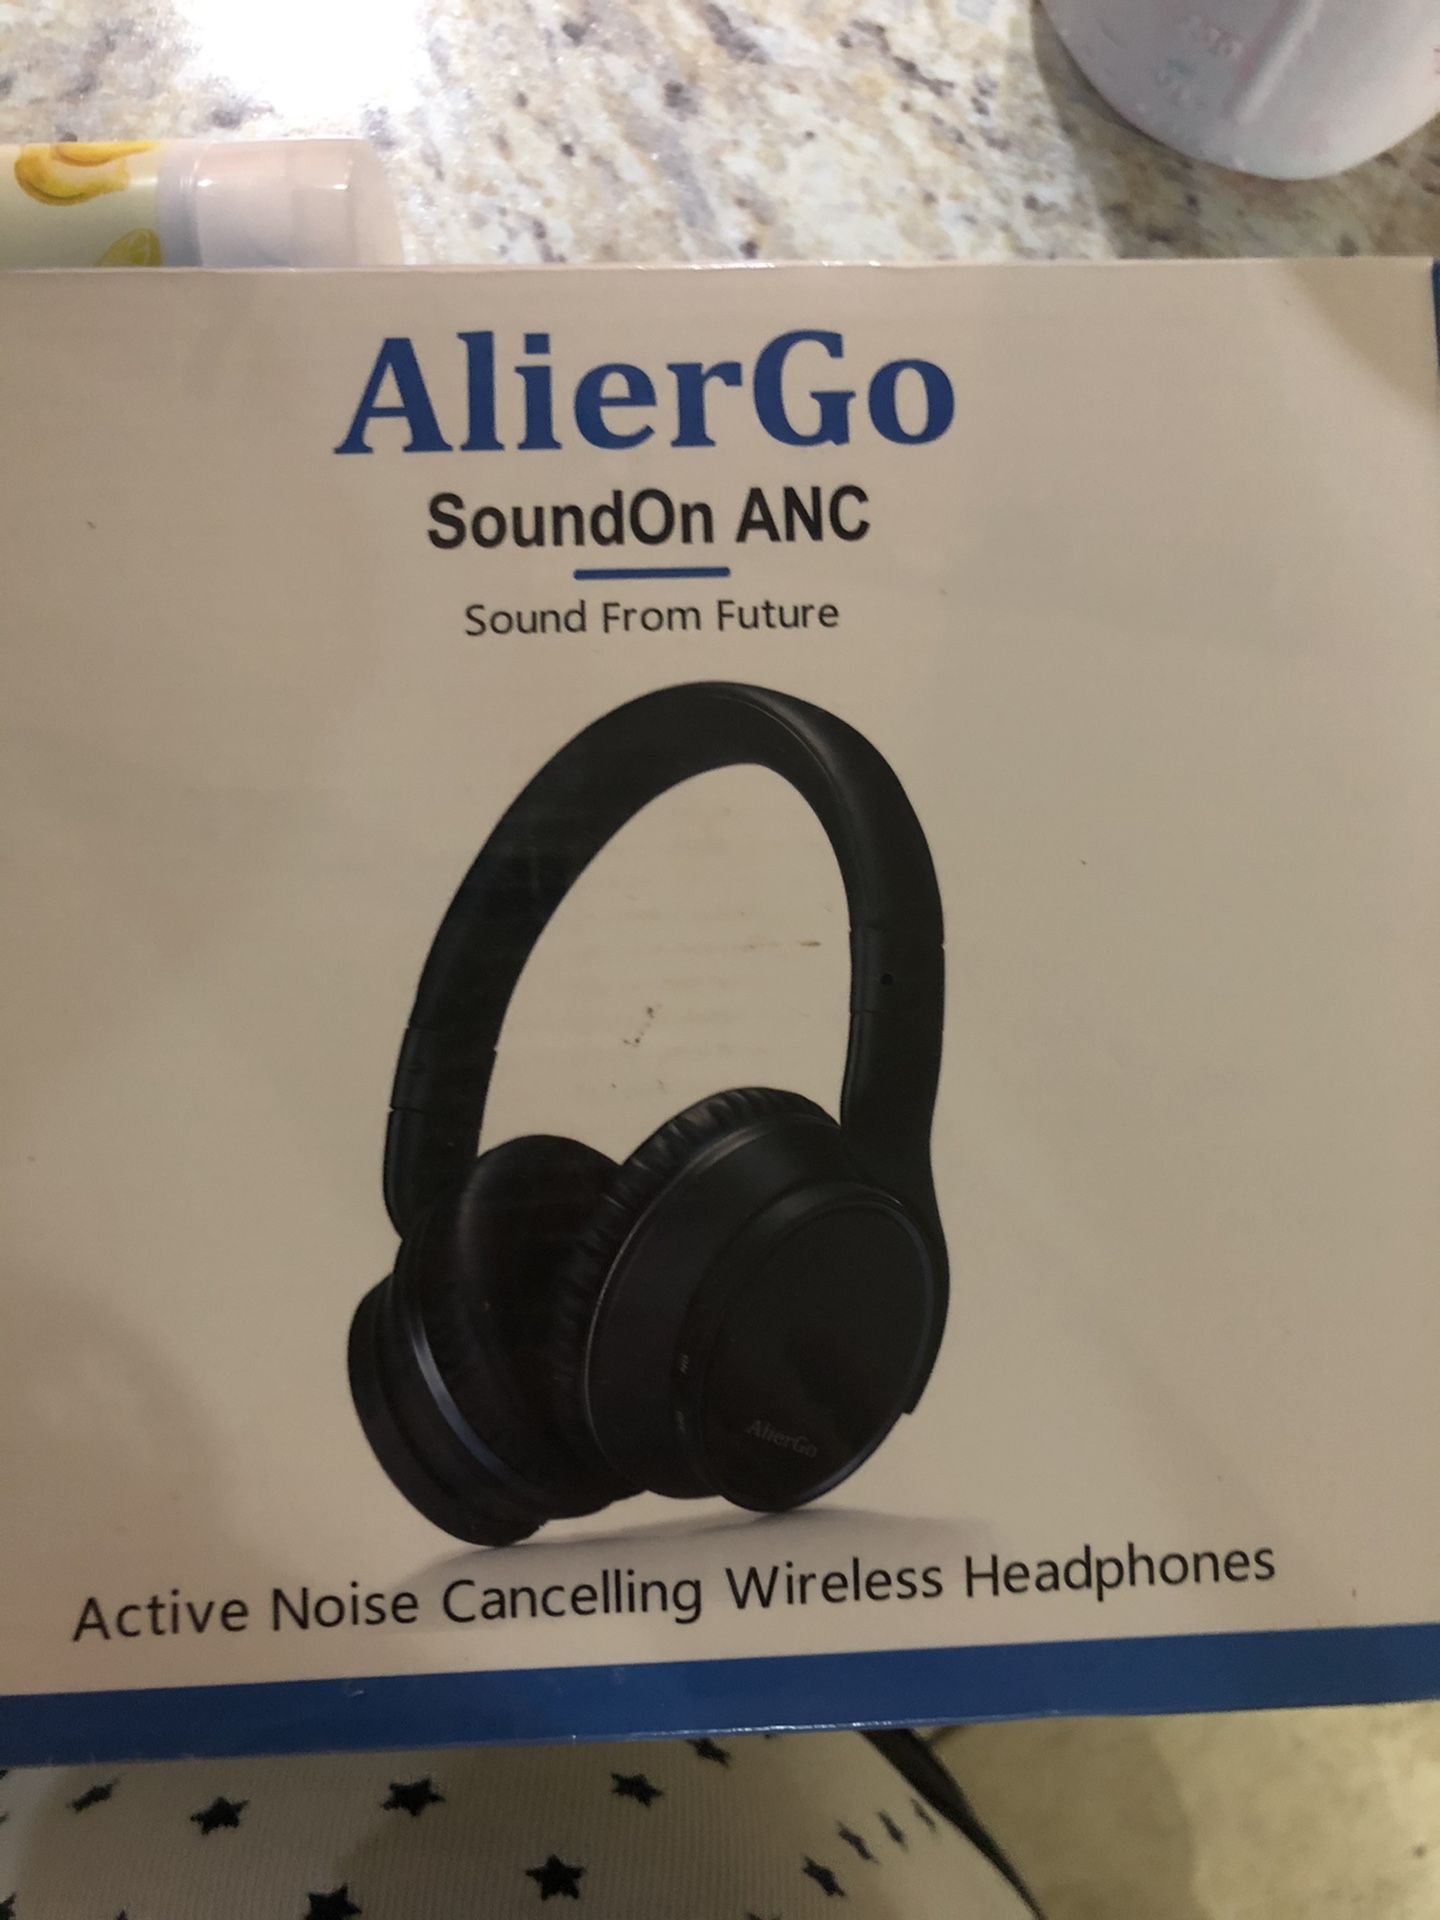 Noise canceling wireless headphones